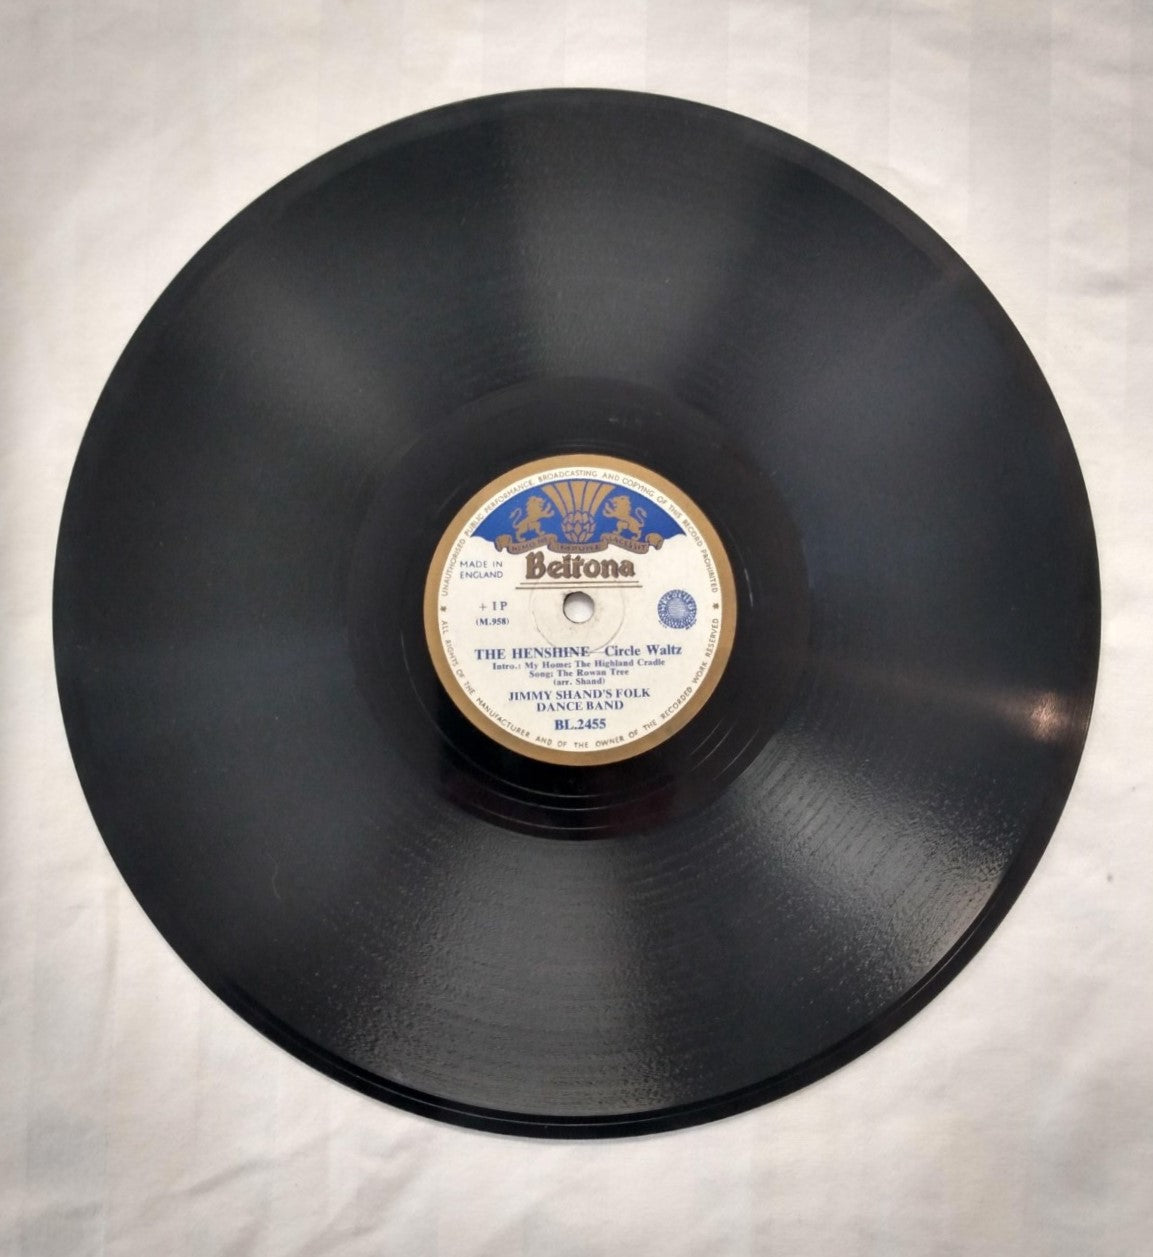 Beltona- Jimmy Shand's Folk Dance Band- The Gie Gordons & The Henshine- BL.2455-78 RPM Record